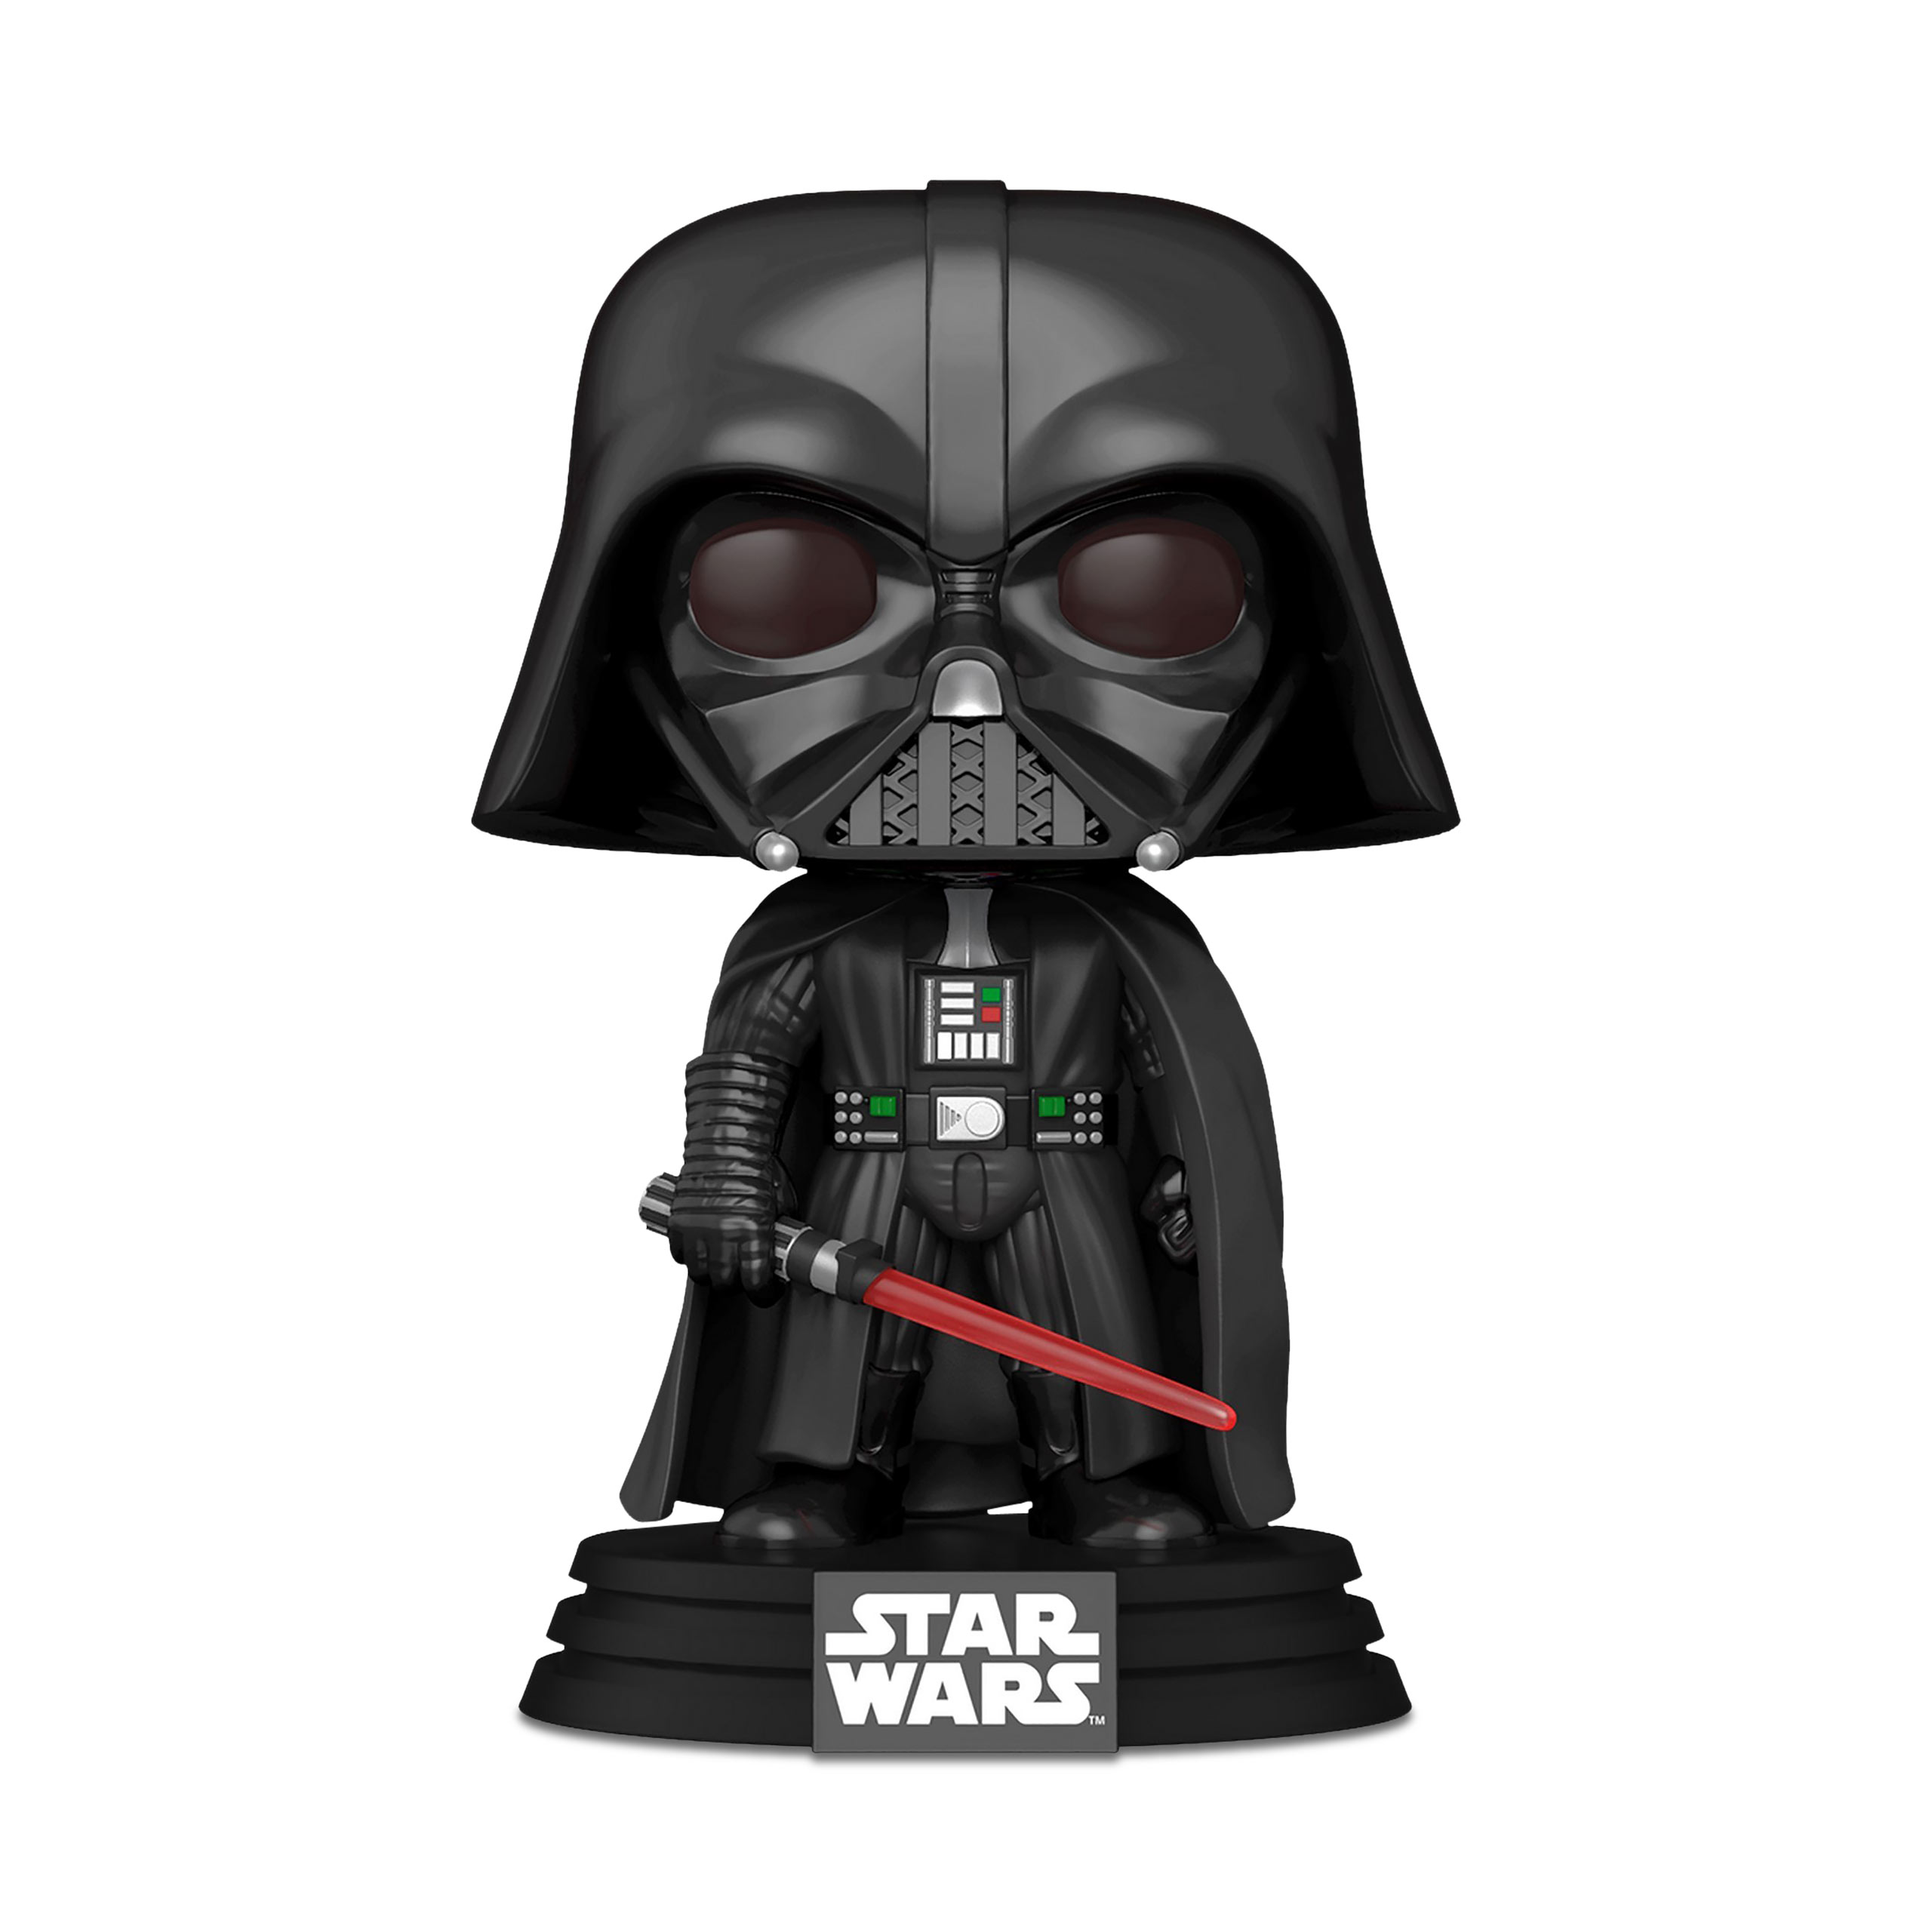 Star Wars - Figurine Bobblehead Funko Pop de Darth Vader